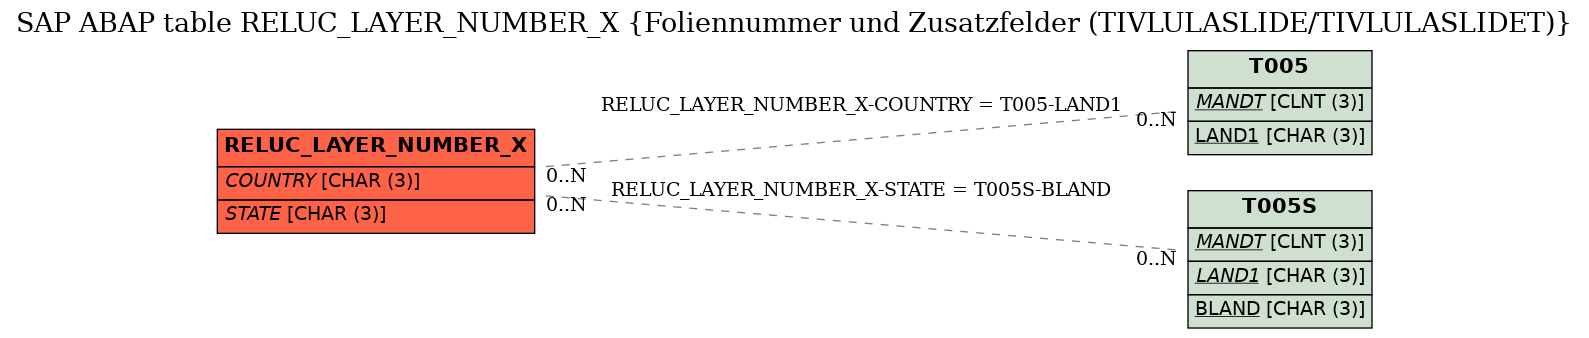 E-R Diagram for table RELUC_LAYER_NUMBER_X (Foliennummer und Zusatzfelder (TIVLULASLIDE/TIVLULASLIDET))